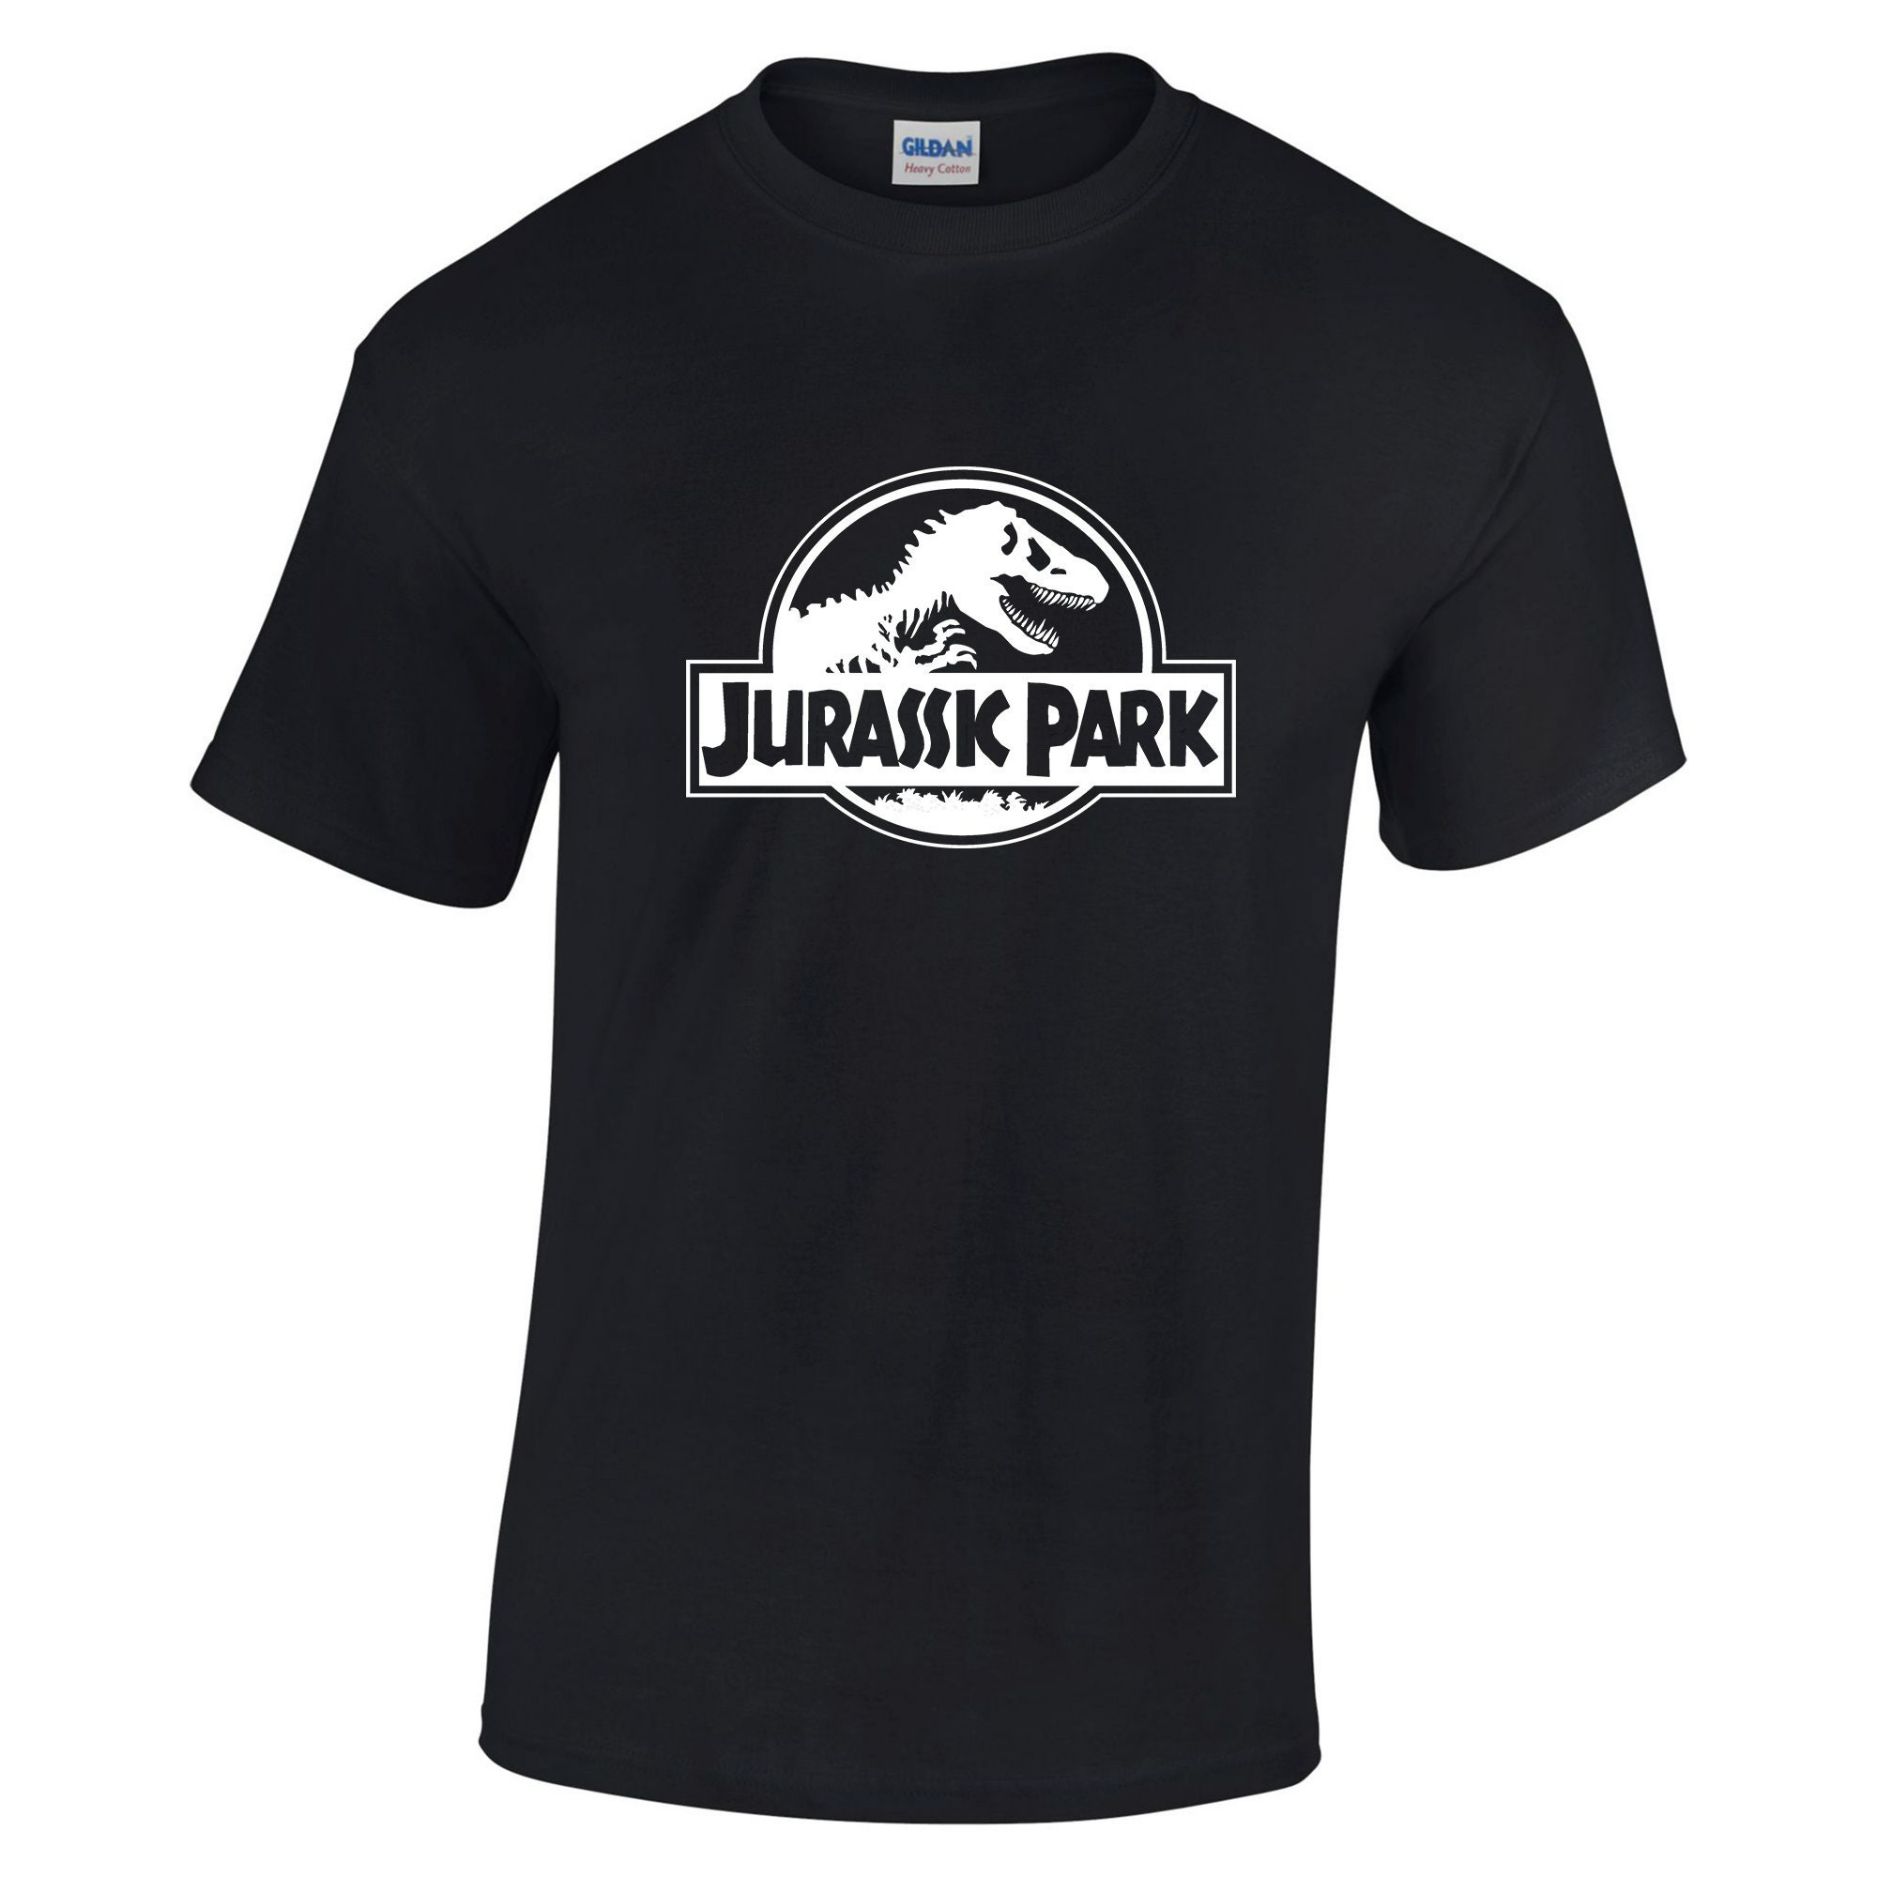 Jurassic Park Tee Shirt